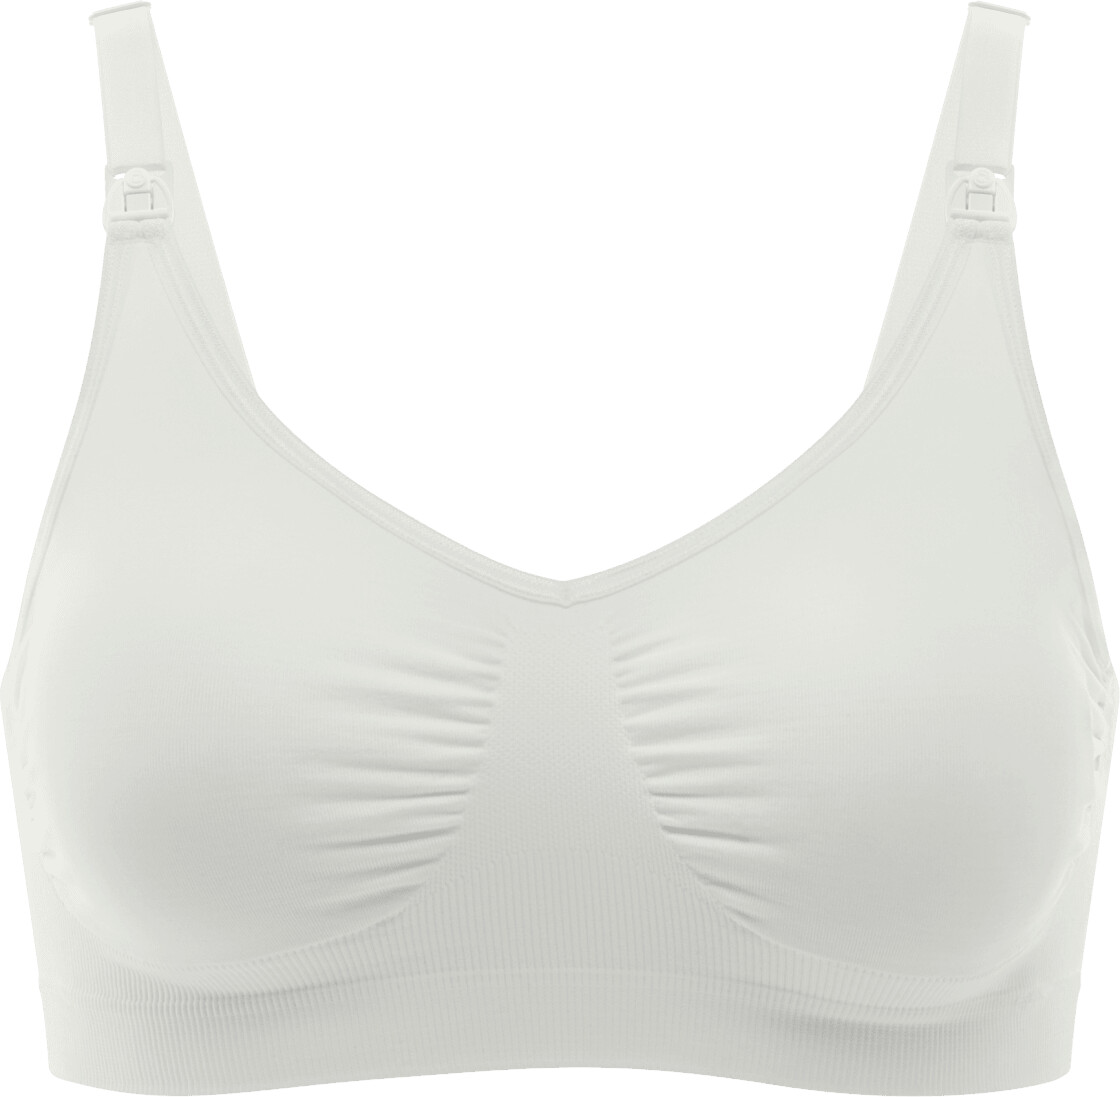 Medela ULTIMATE BODY FIT STILL-BH - T-shirt bra - white - Zalando.de